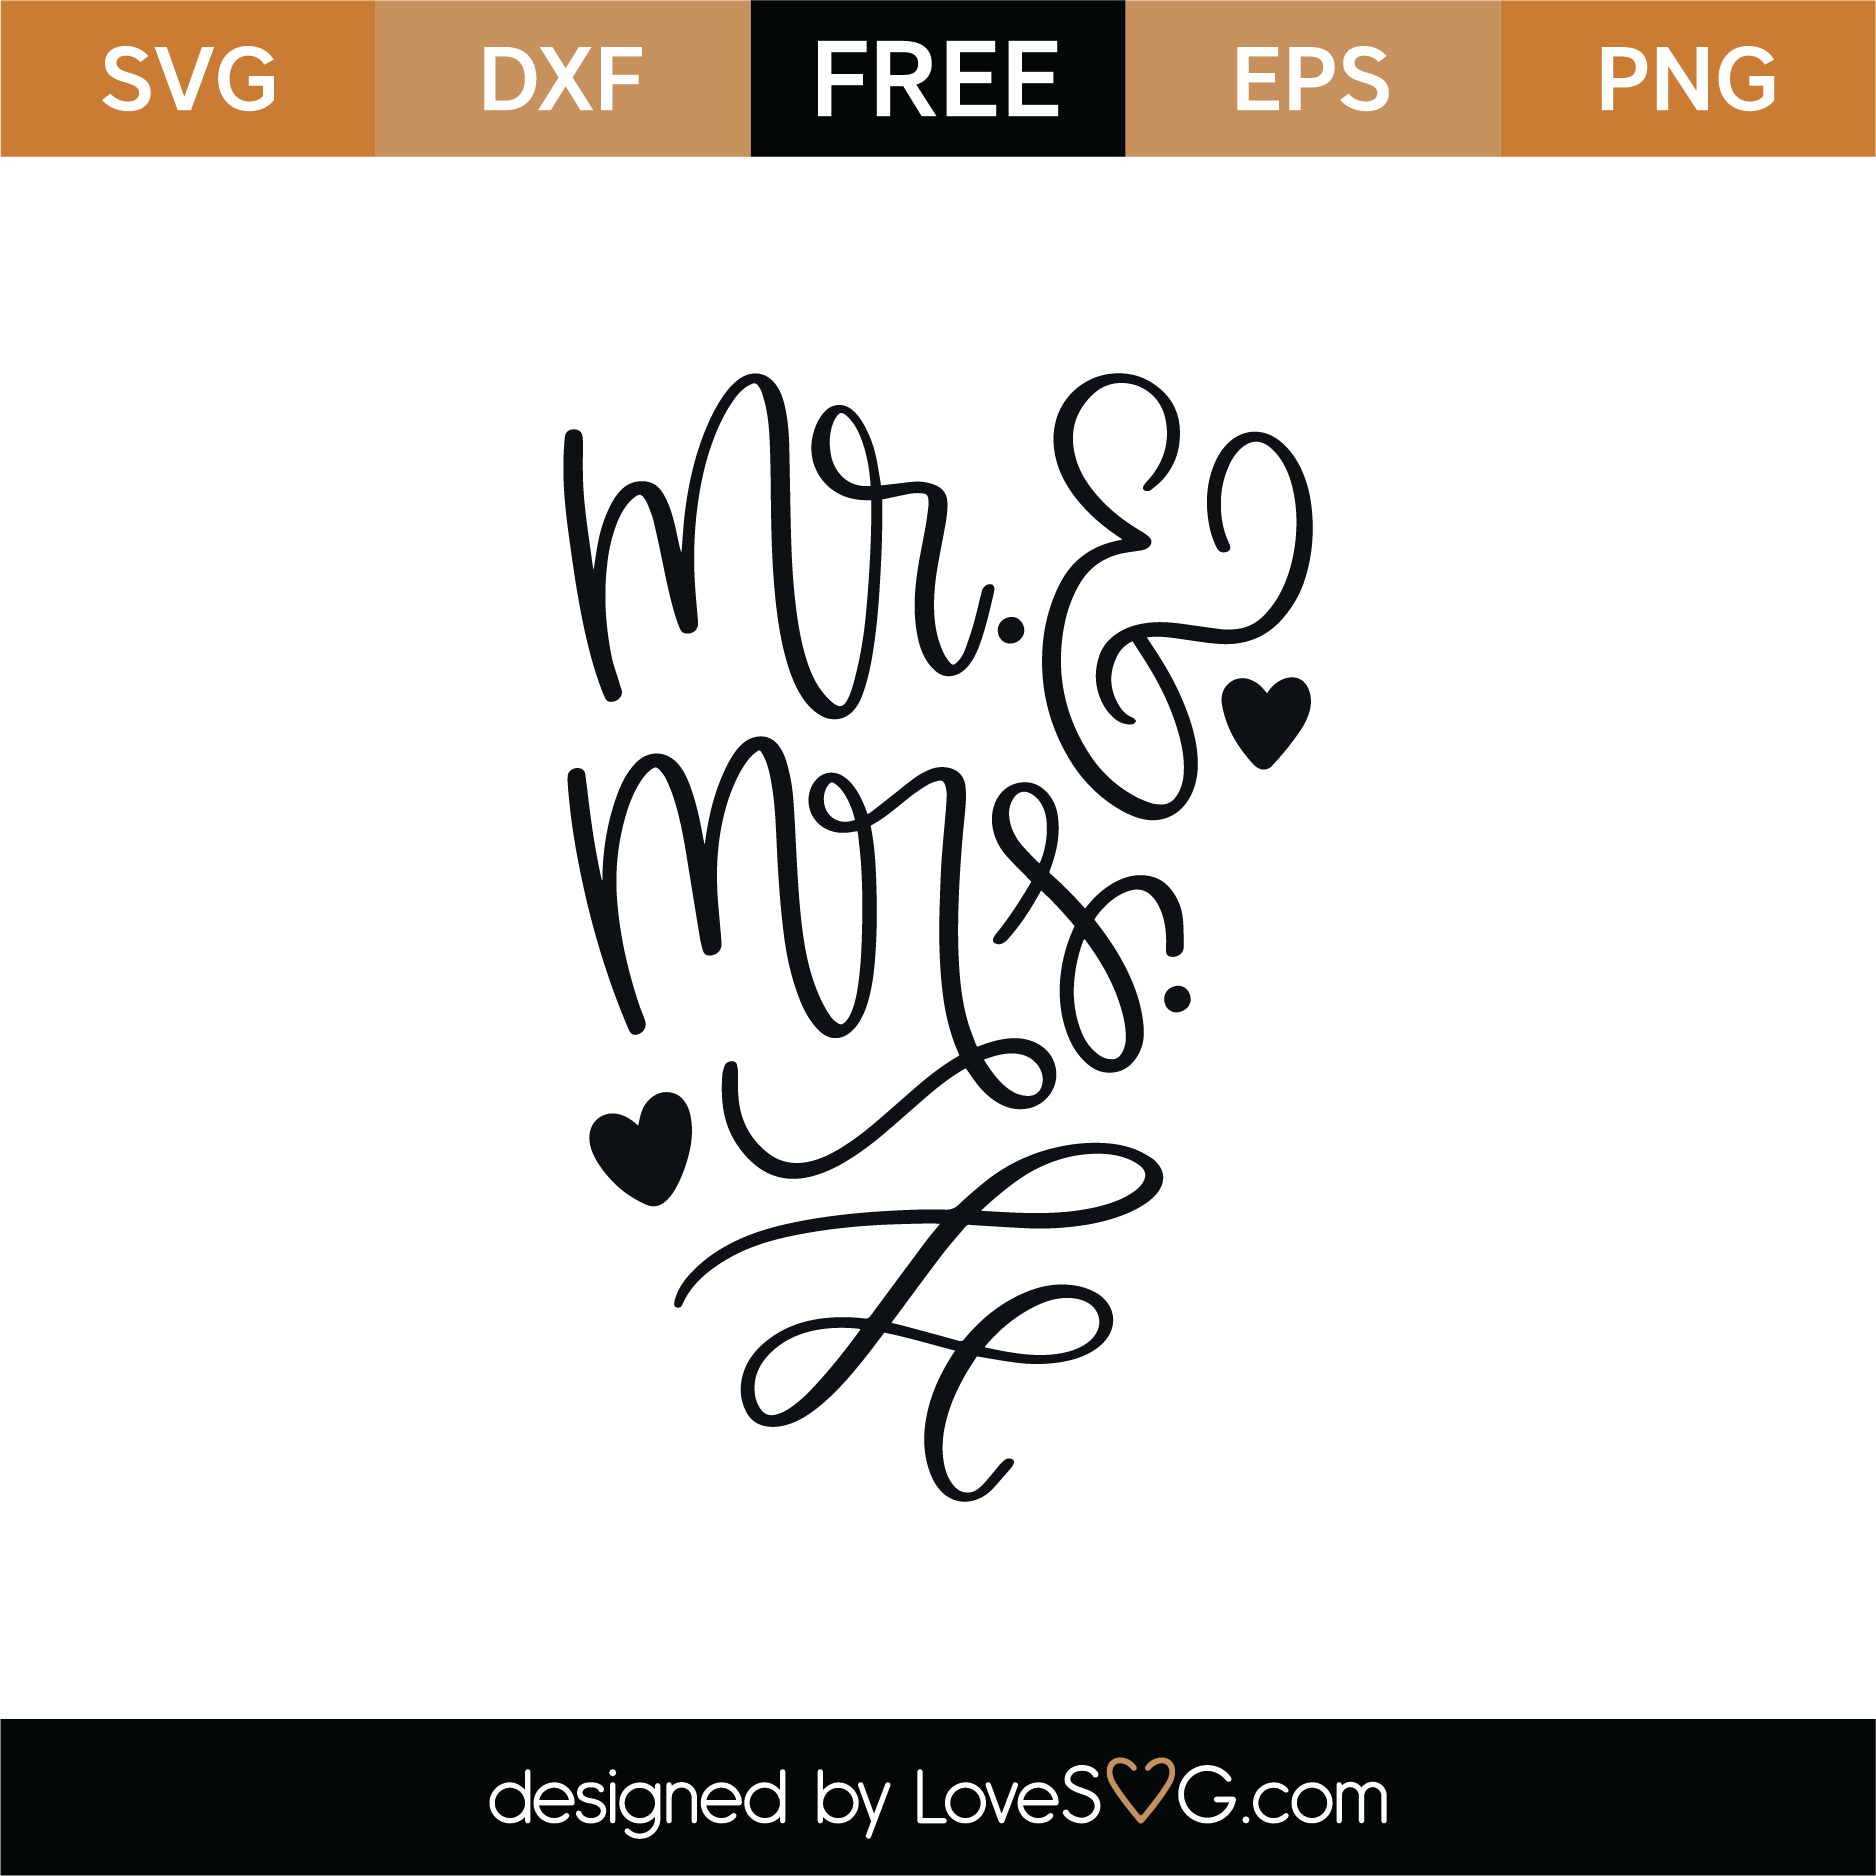 Download Free Mr and Mrs SVG Cut File | Lovesvg.com